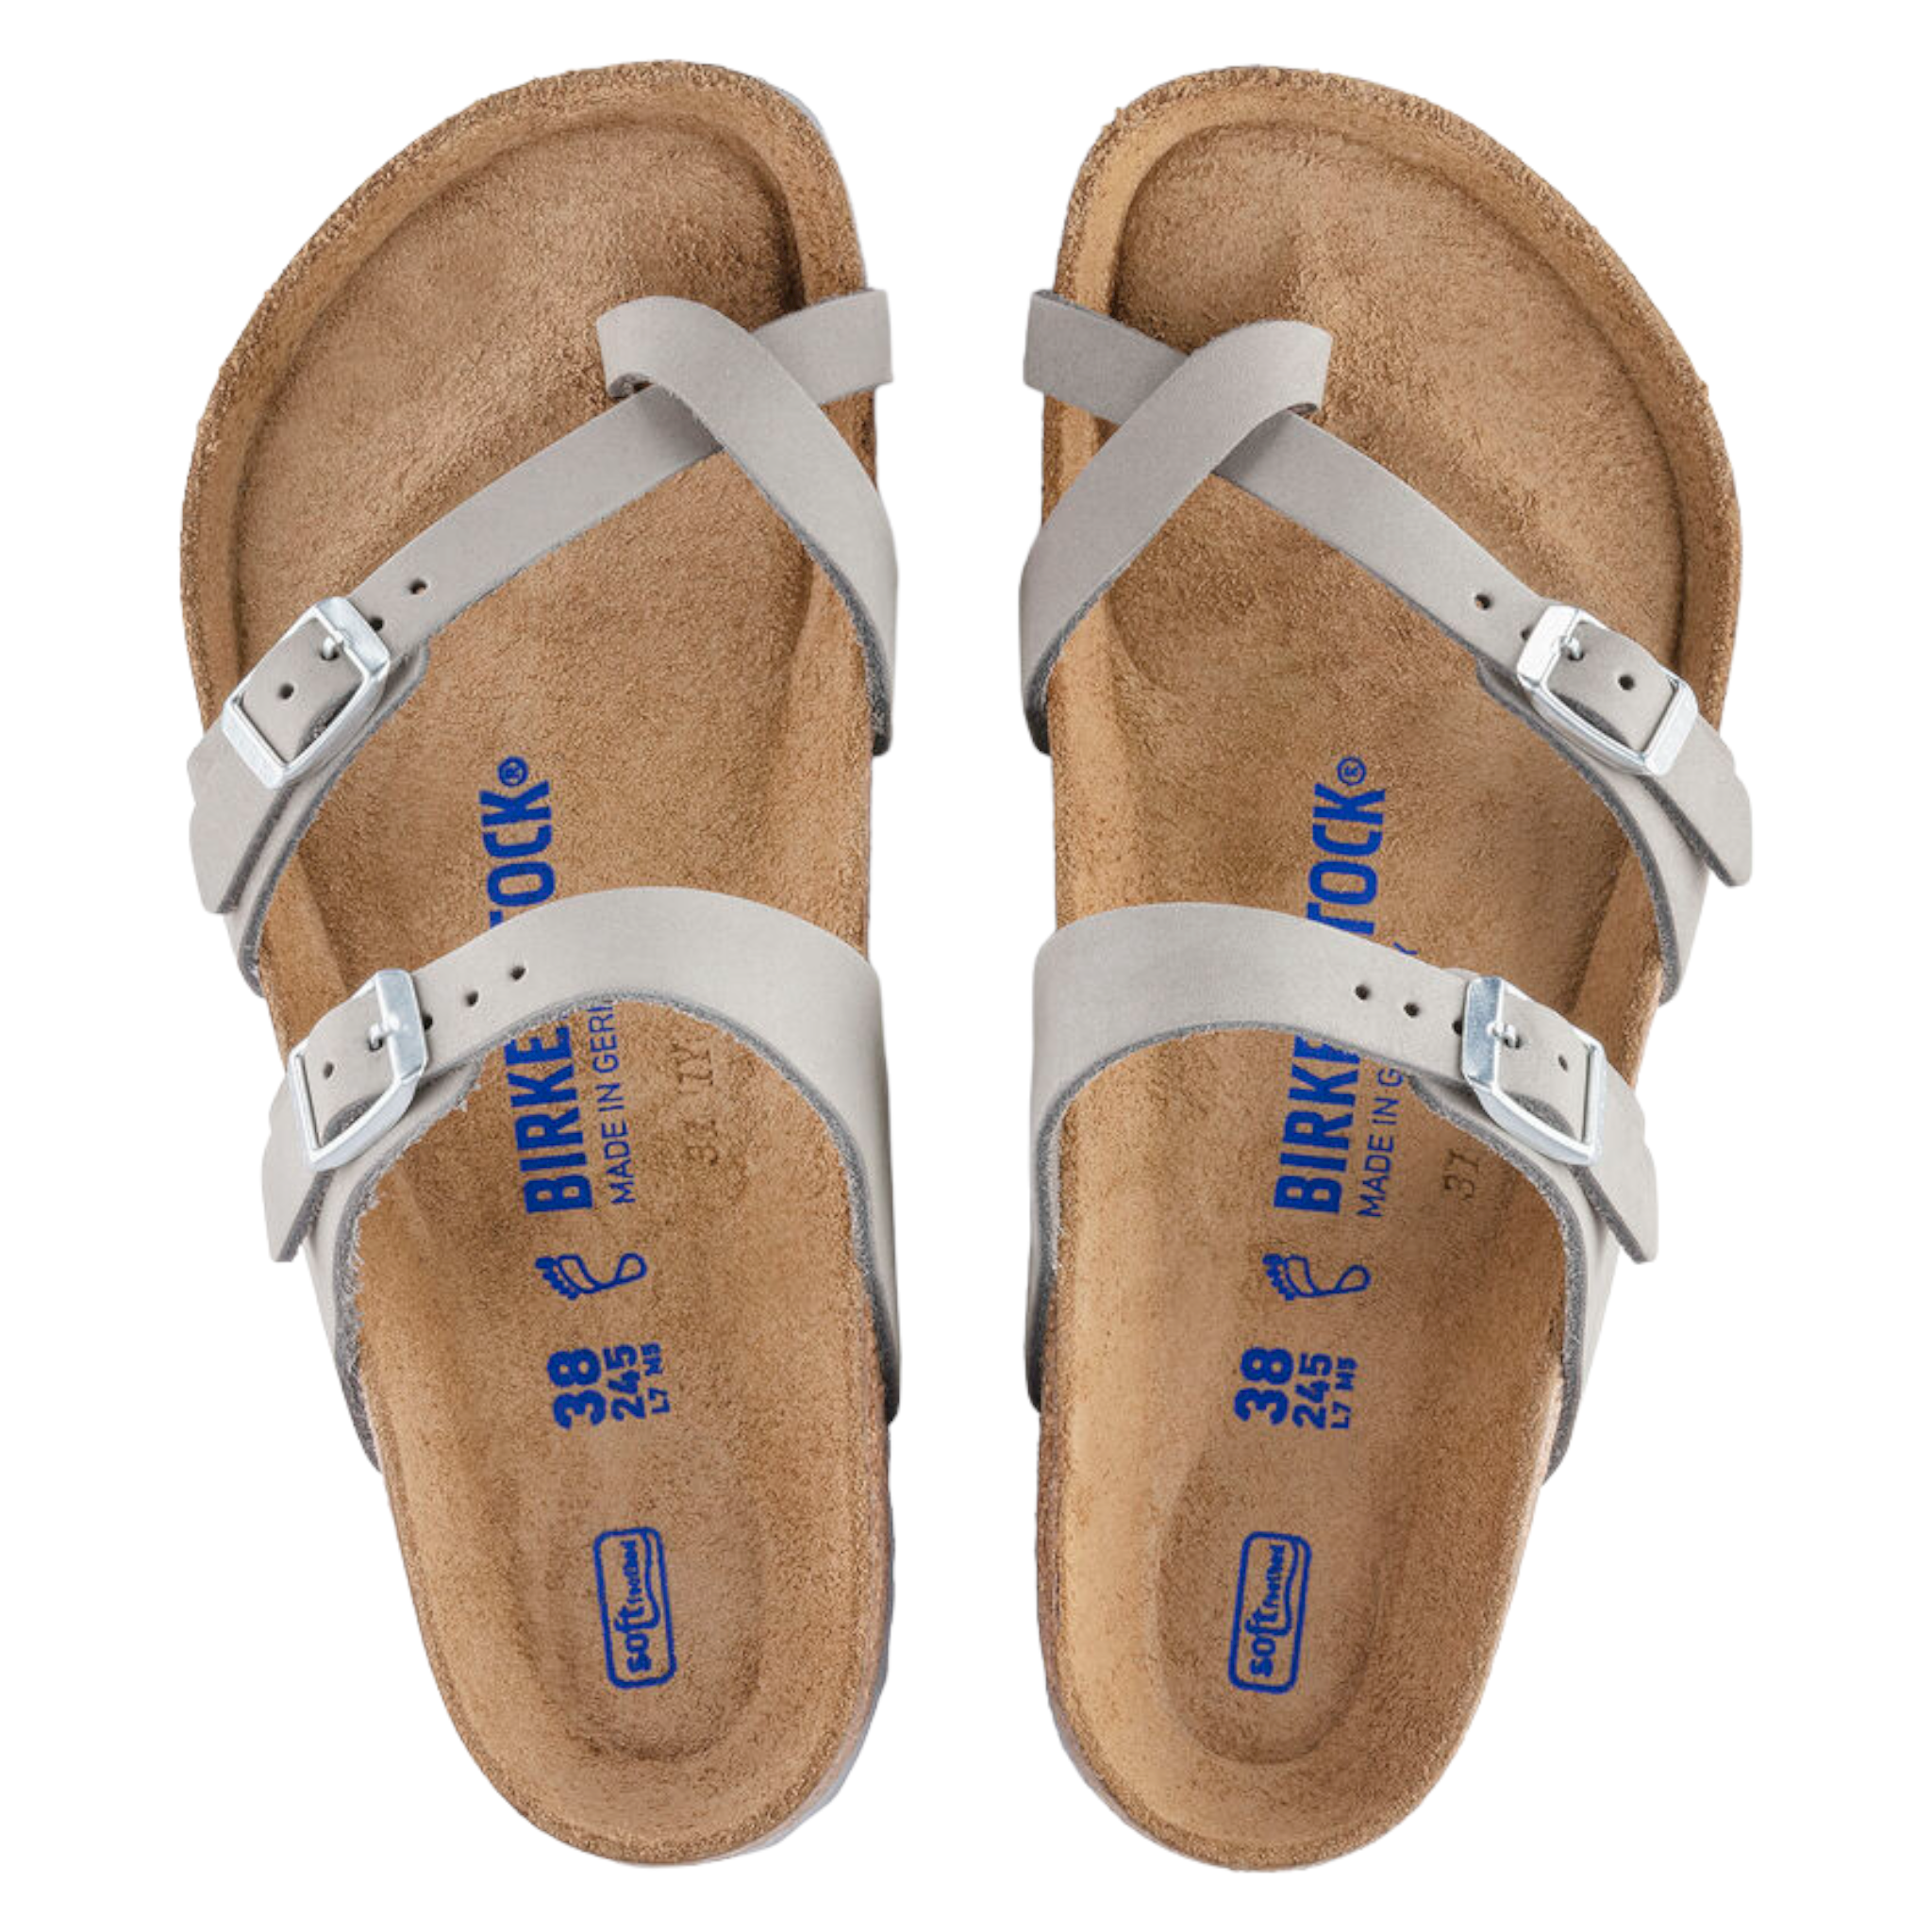 Mayari SFB Soft NB - shoe&amp;me - Birkenstock - Jandal - Jandals, Sandals, Slides/Scuffs, Summer 22, Womens